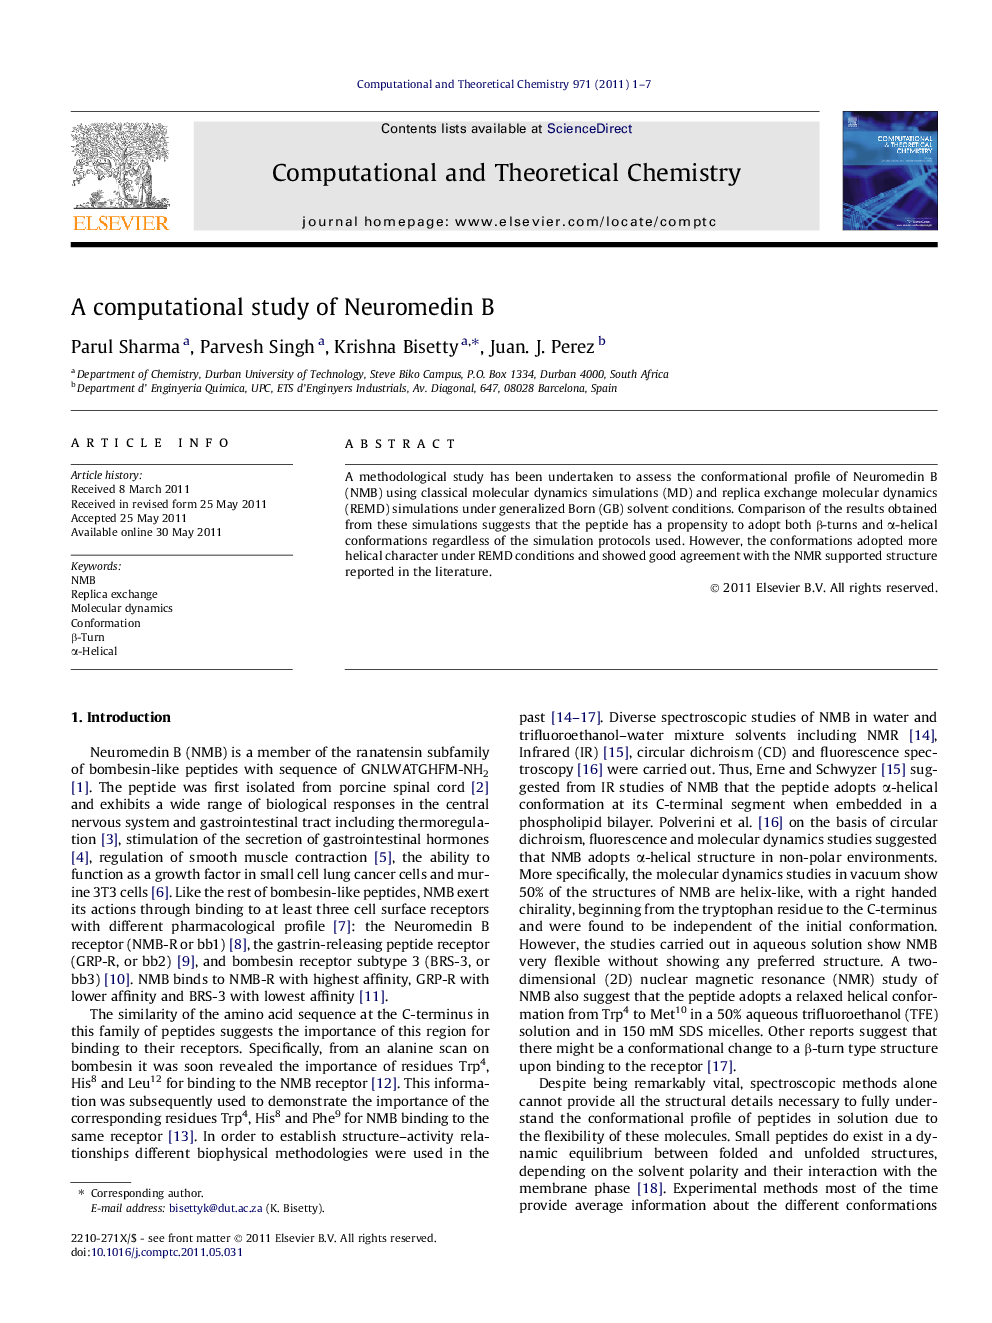 A computational study of Neuromedin B